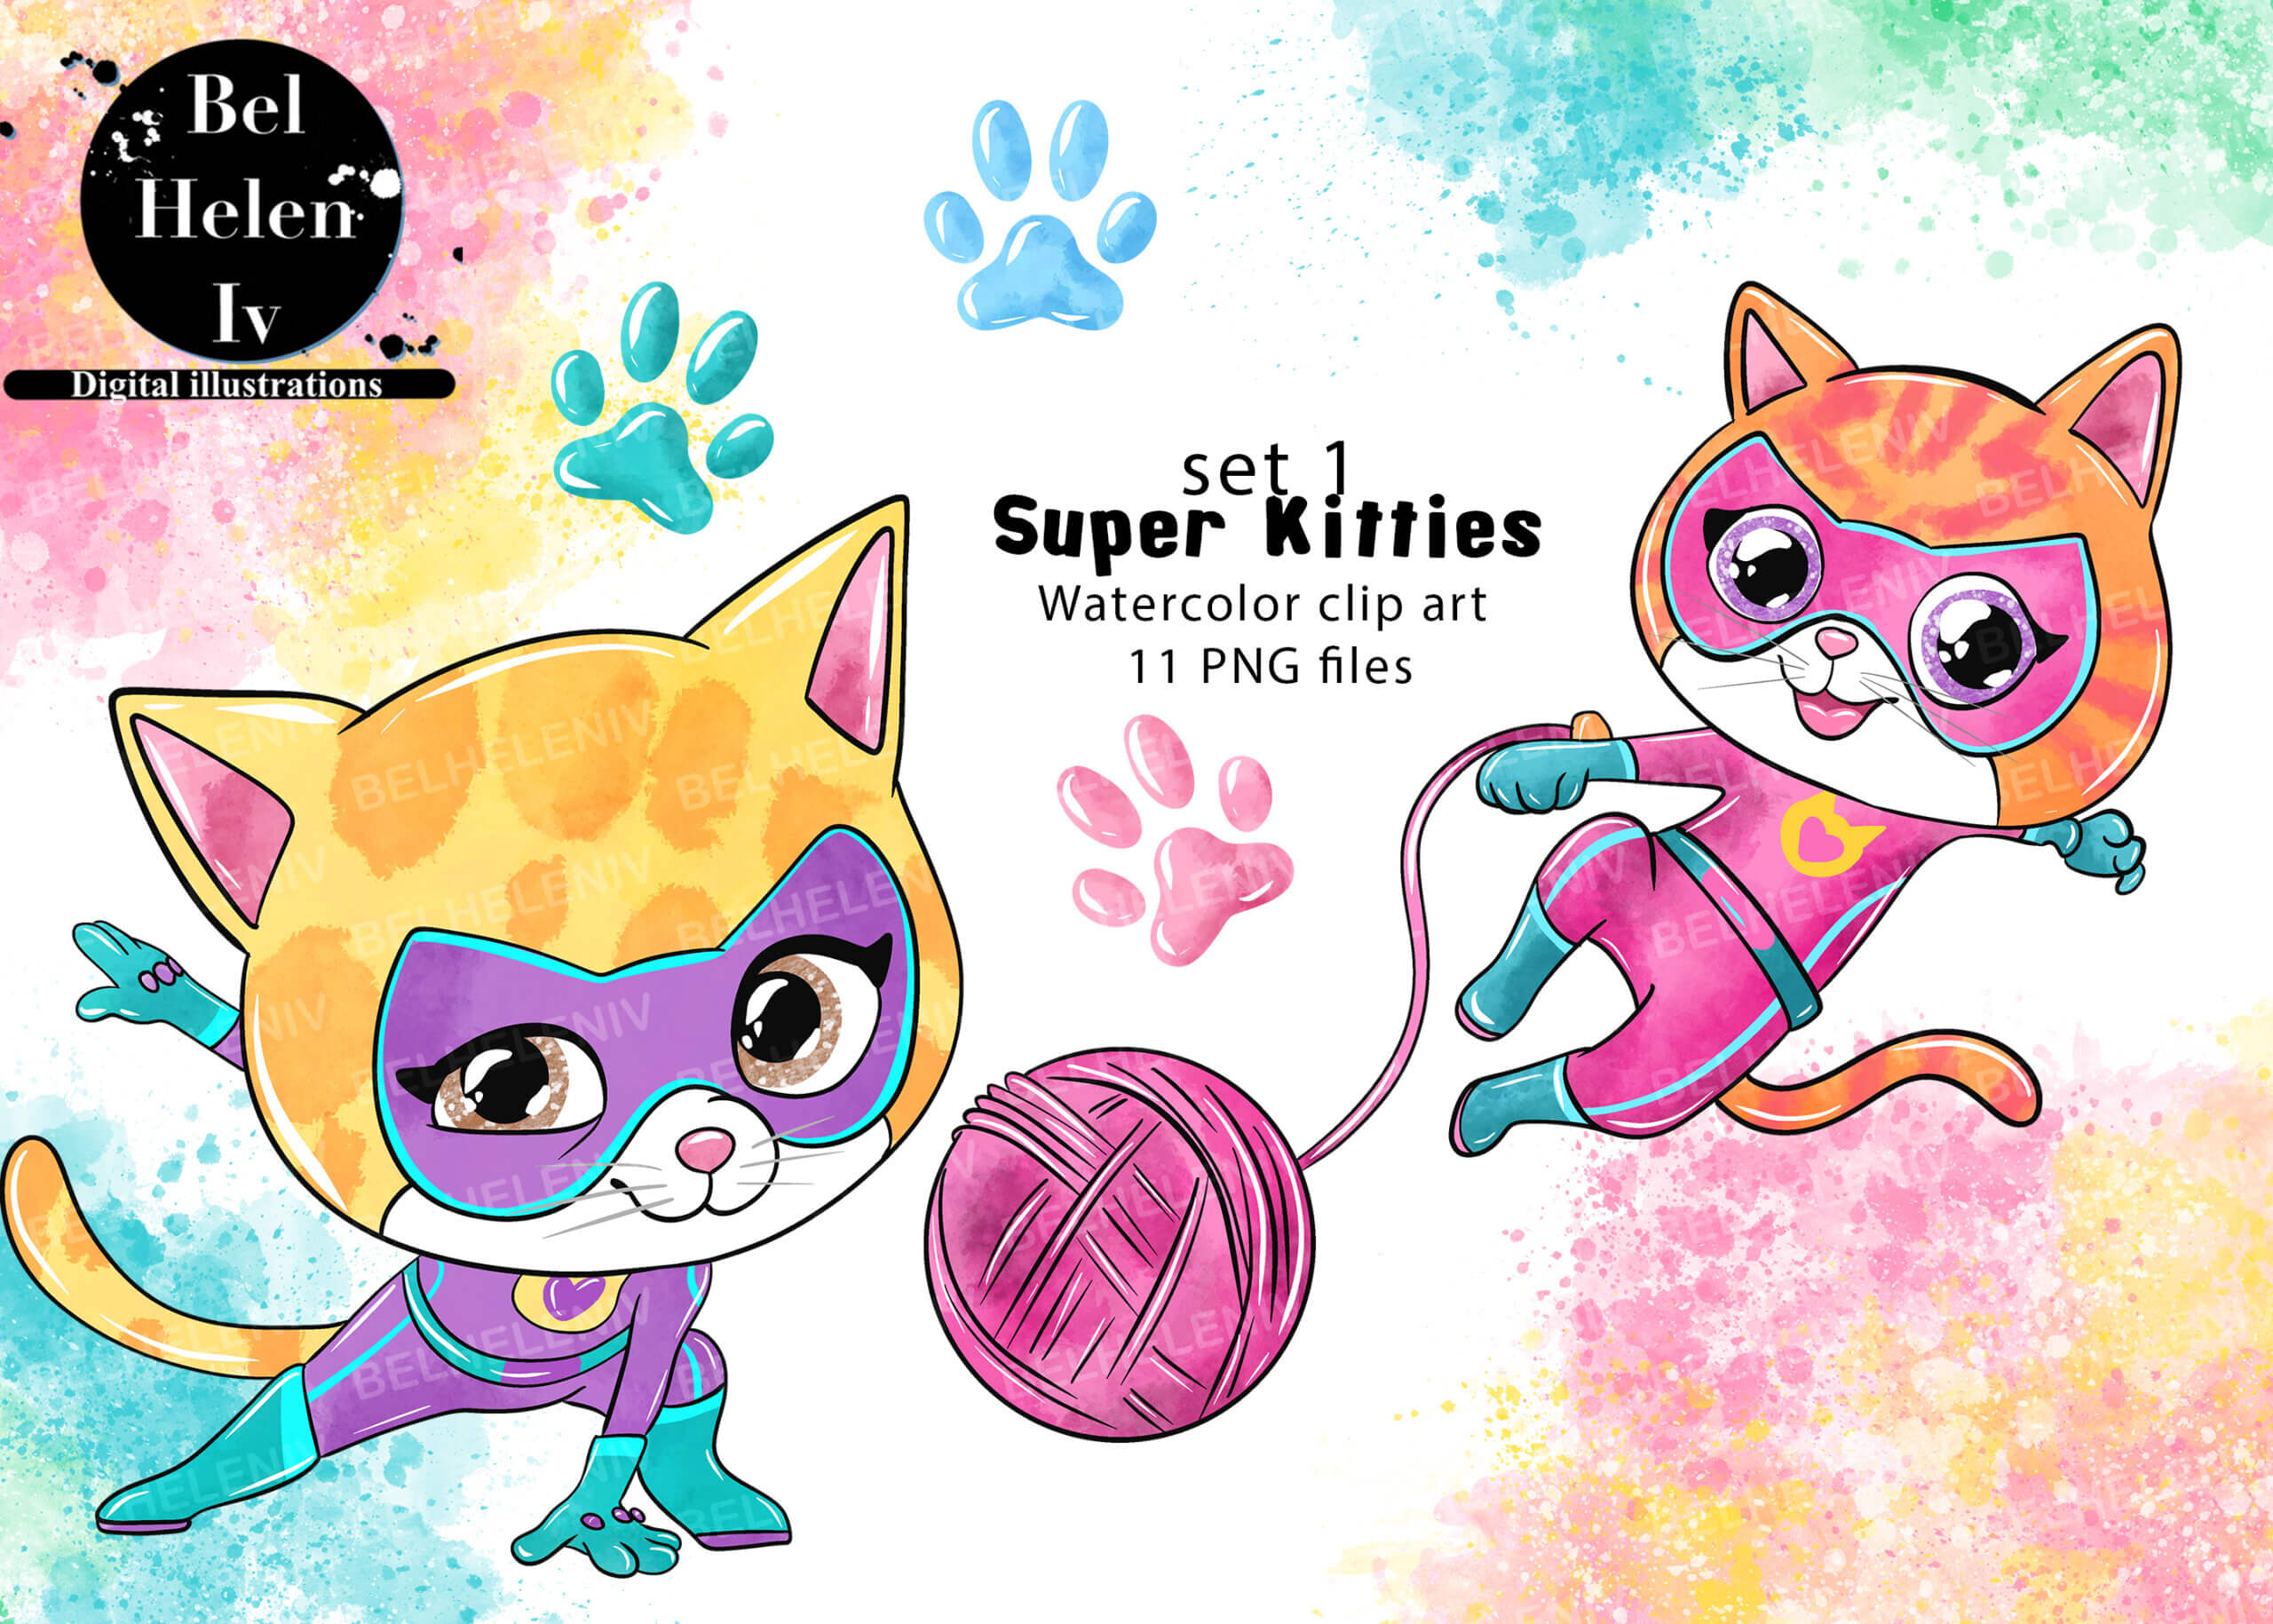 Super Kitties set 1